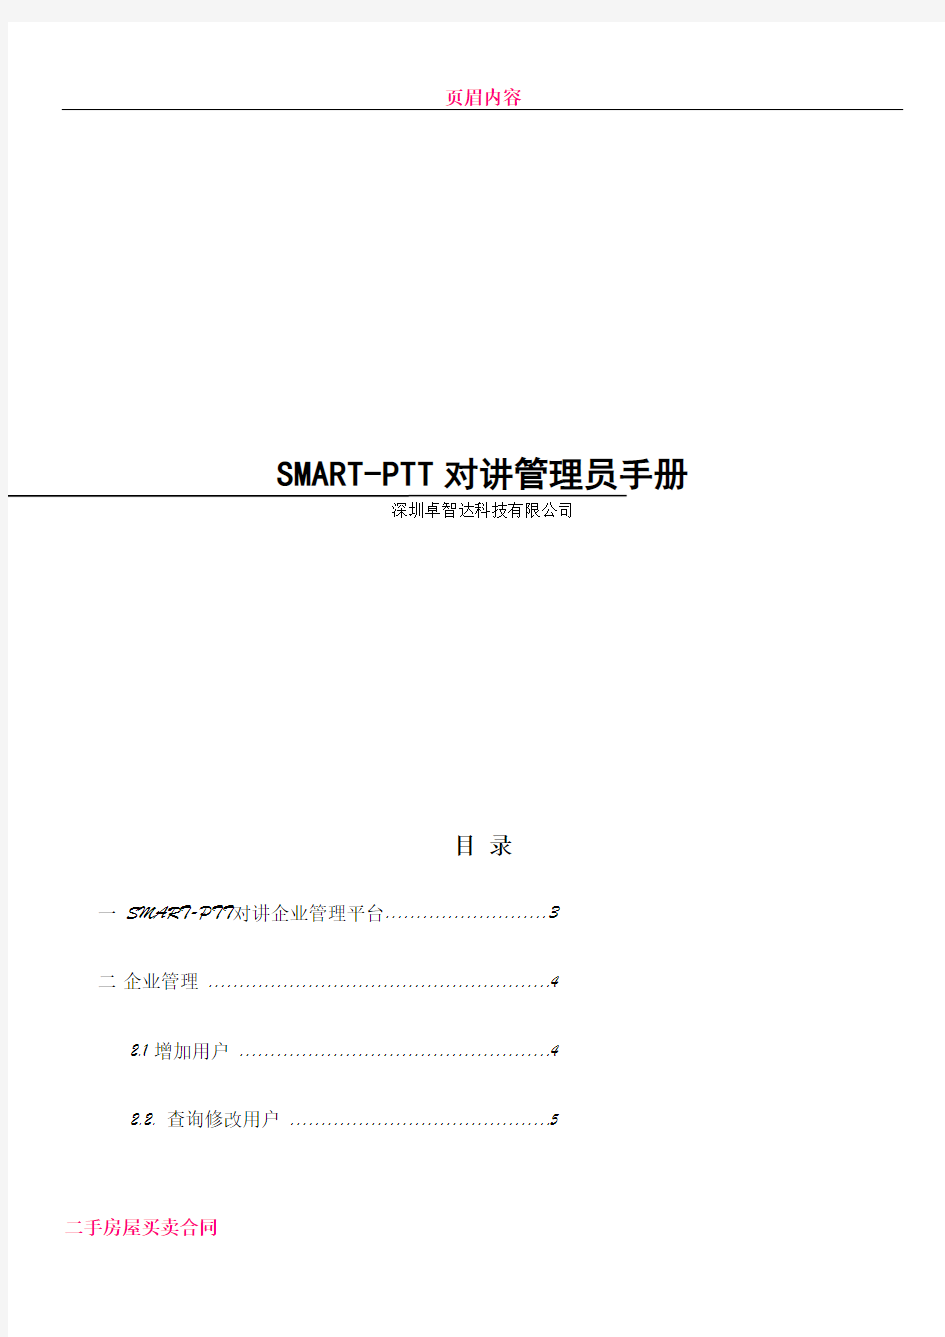 SMART-PTT企业管理平台操作手册